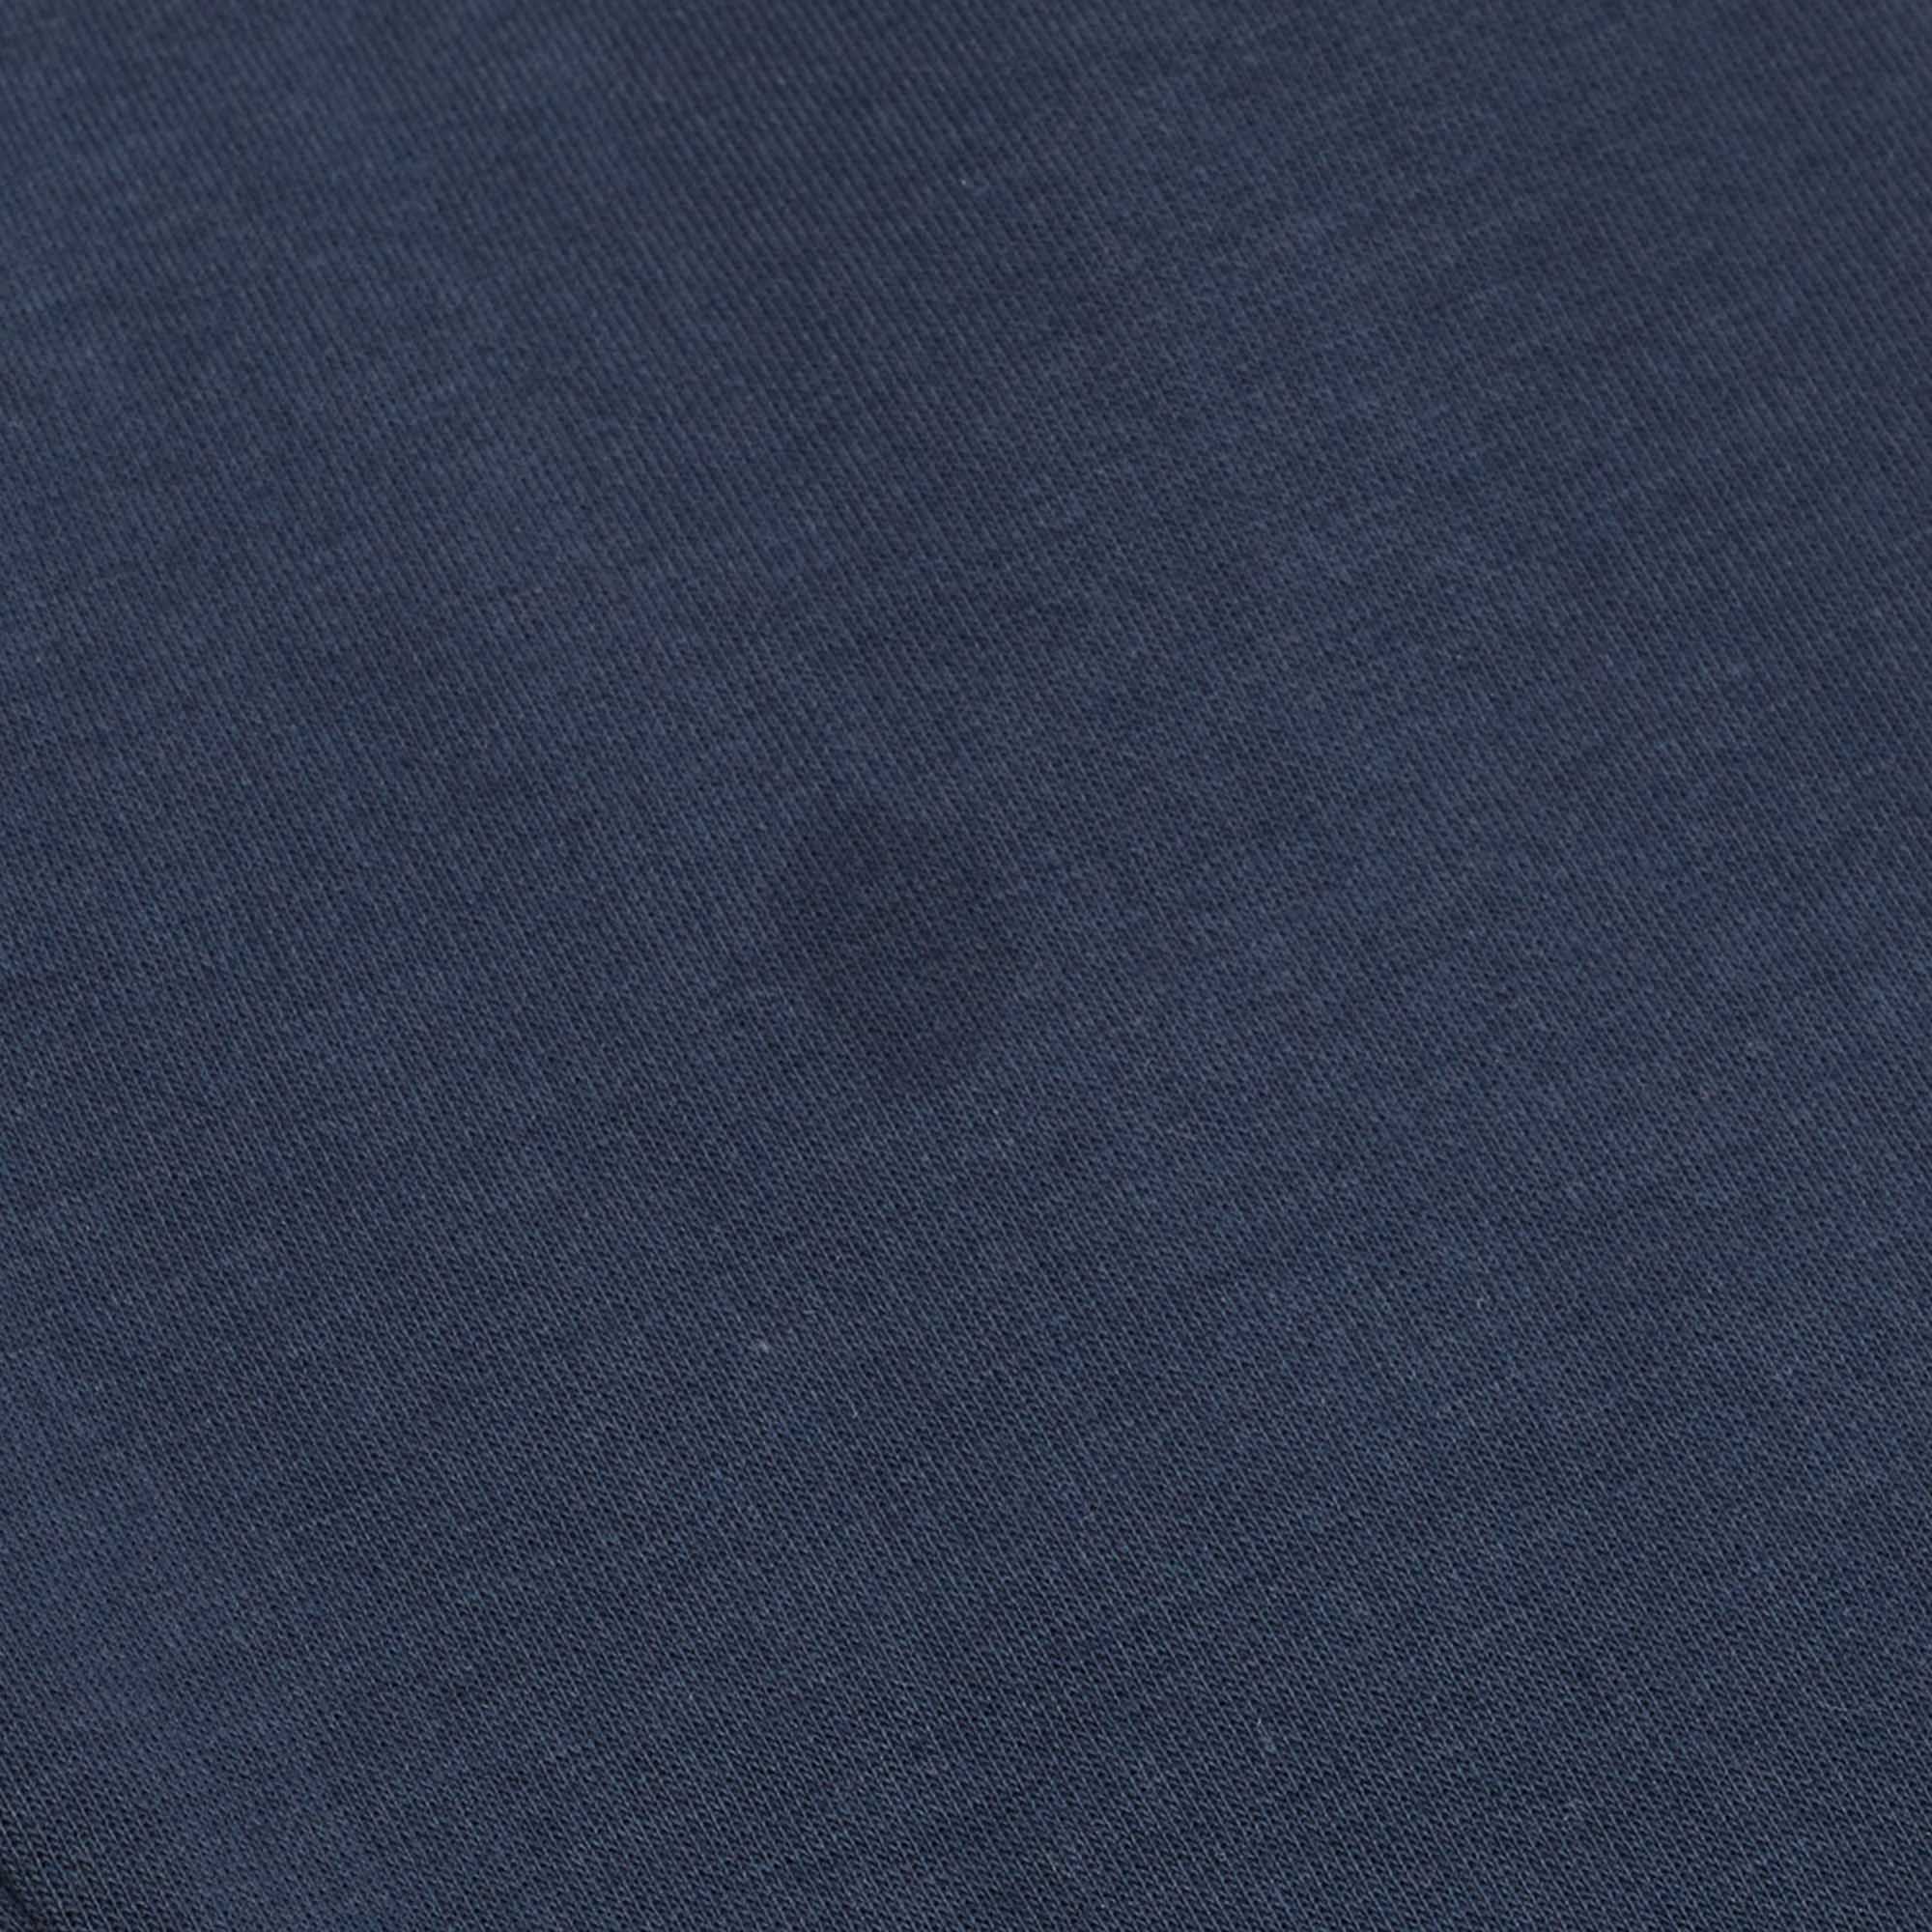 Boss By Hugo Boss Navy Blue Logo Print Knit Salbo Circle Sweatshirt L